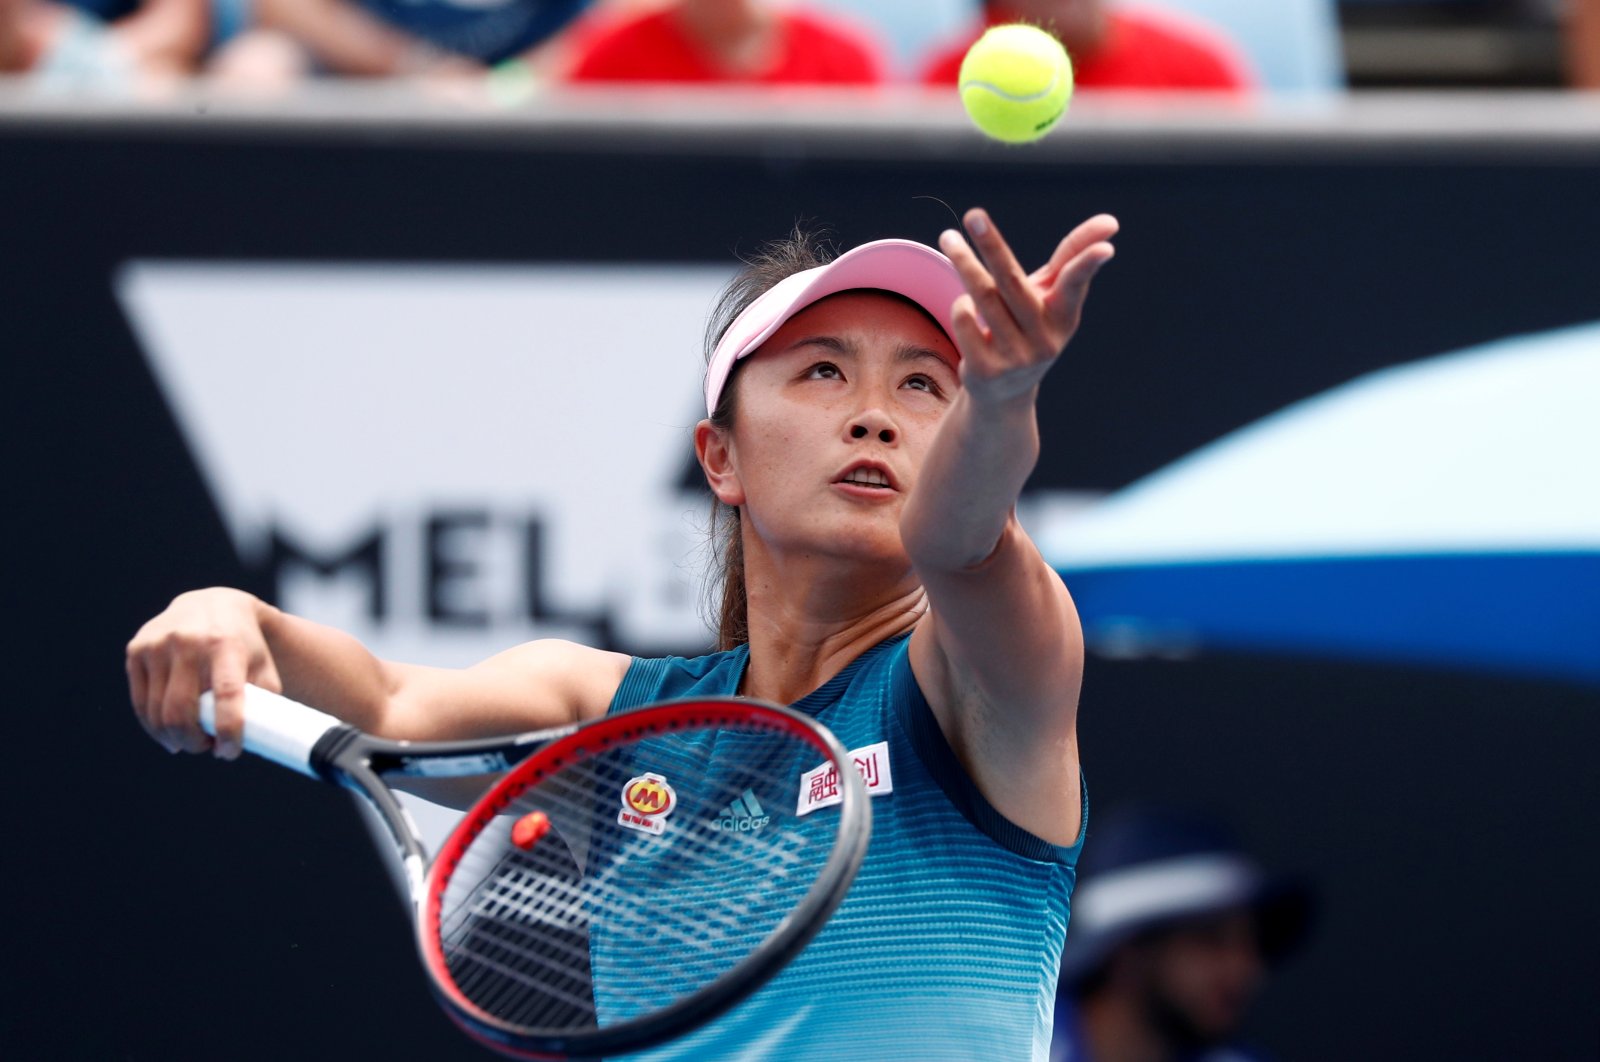 Bintang tenis China Peng menuduh mantan wakil perdana menteri Zhang melakukan pelecehan seksual